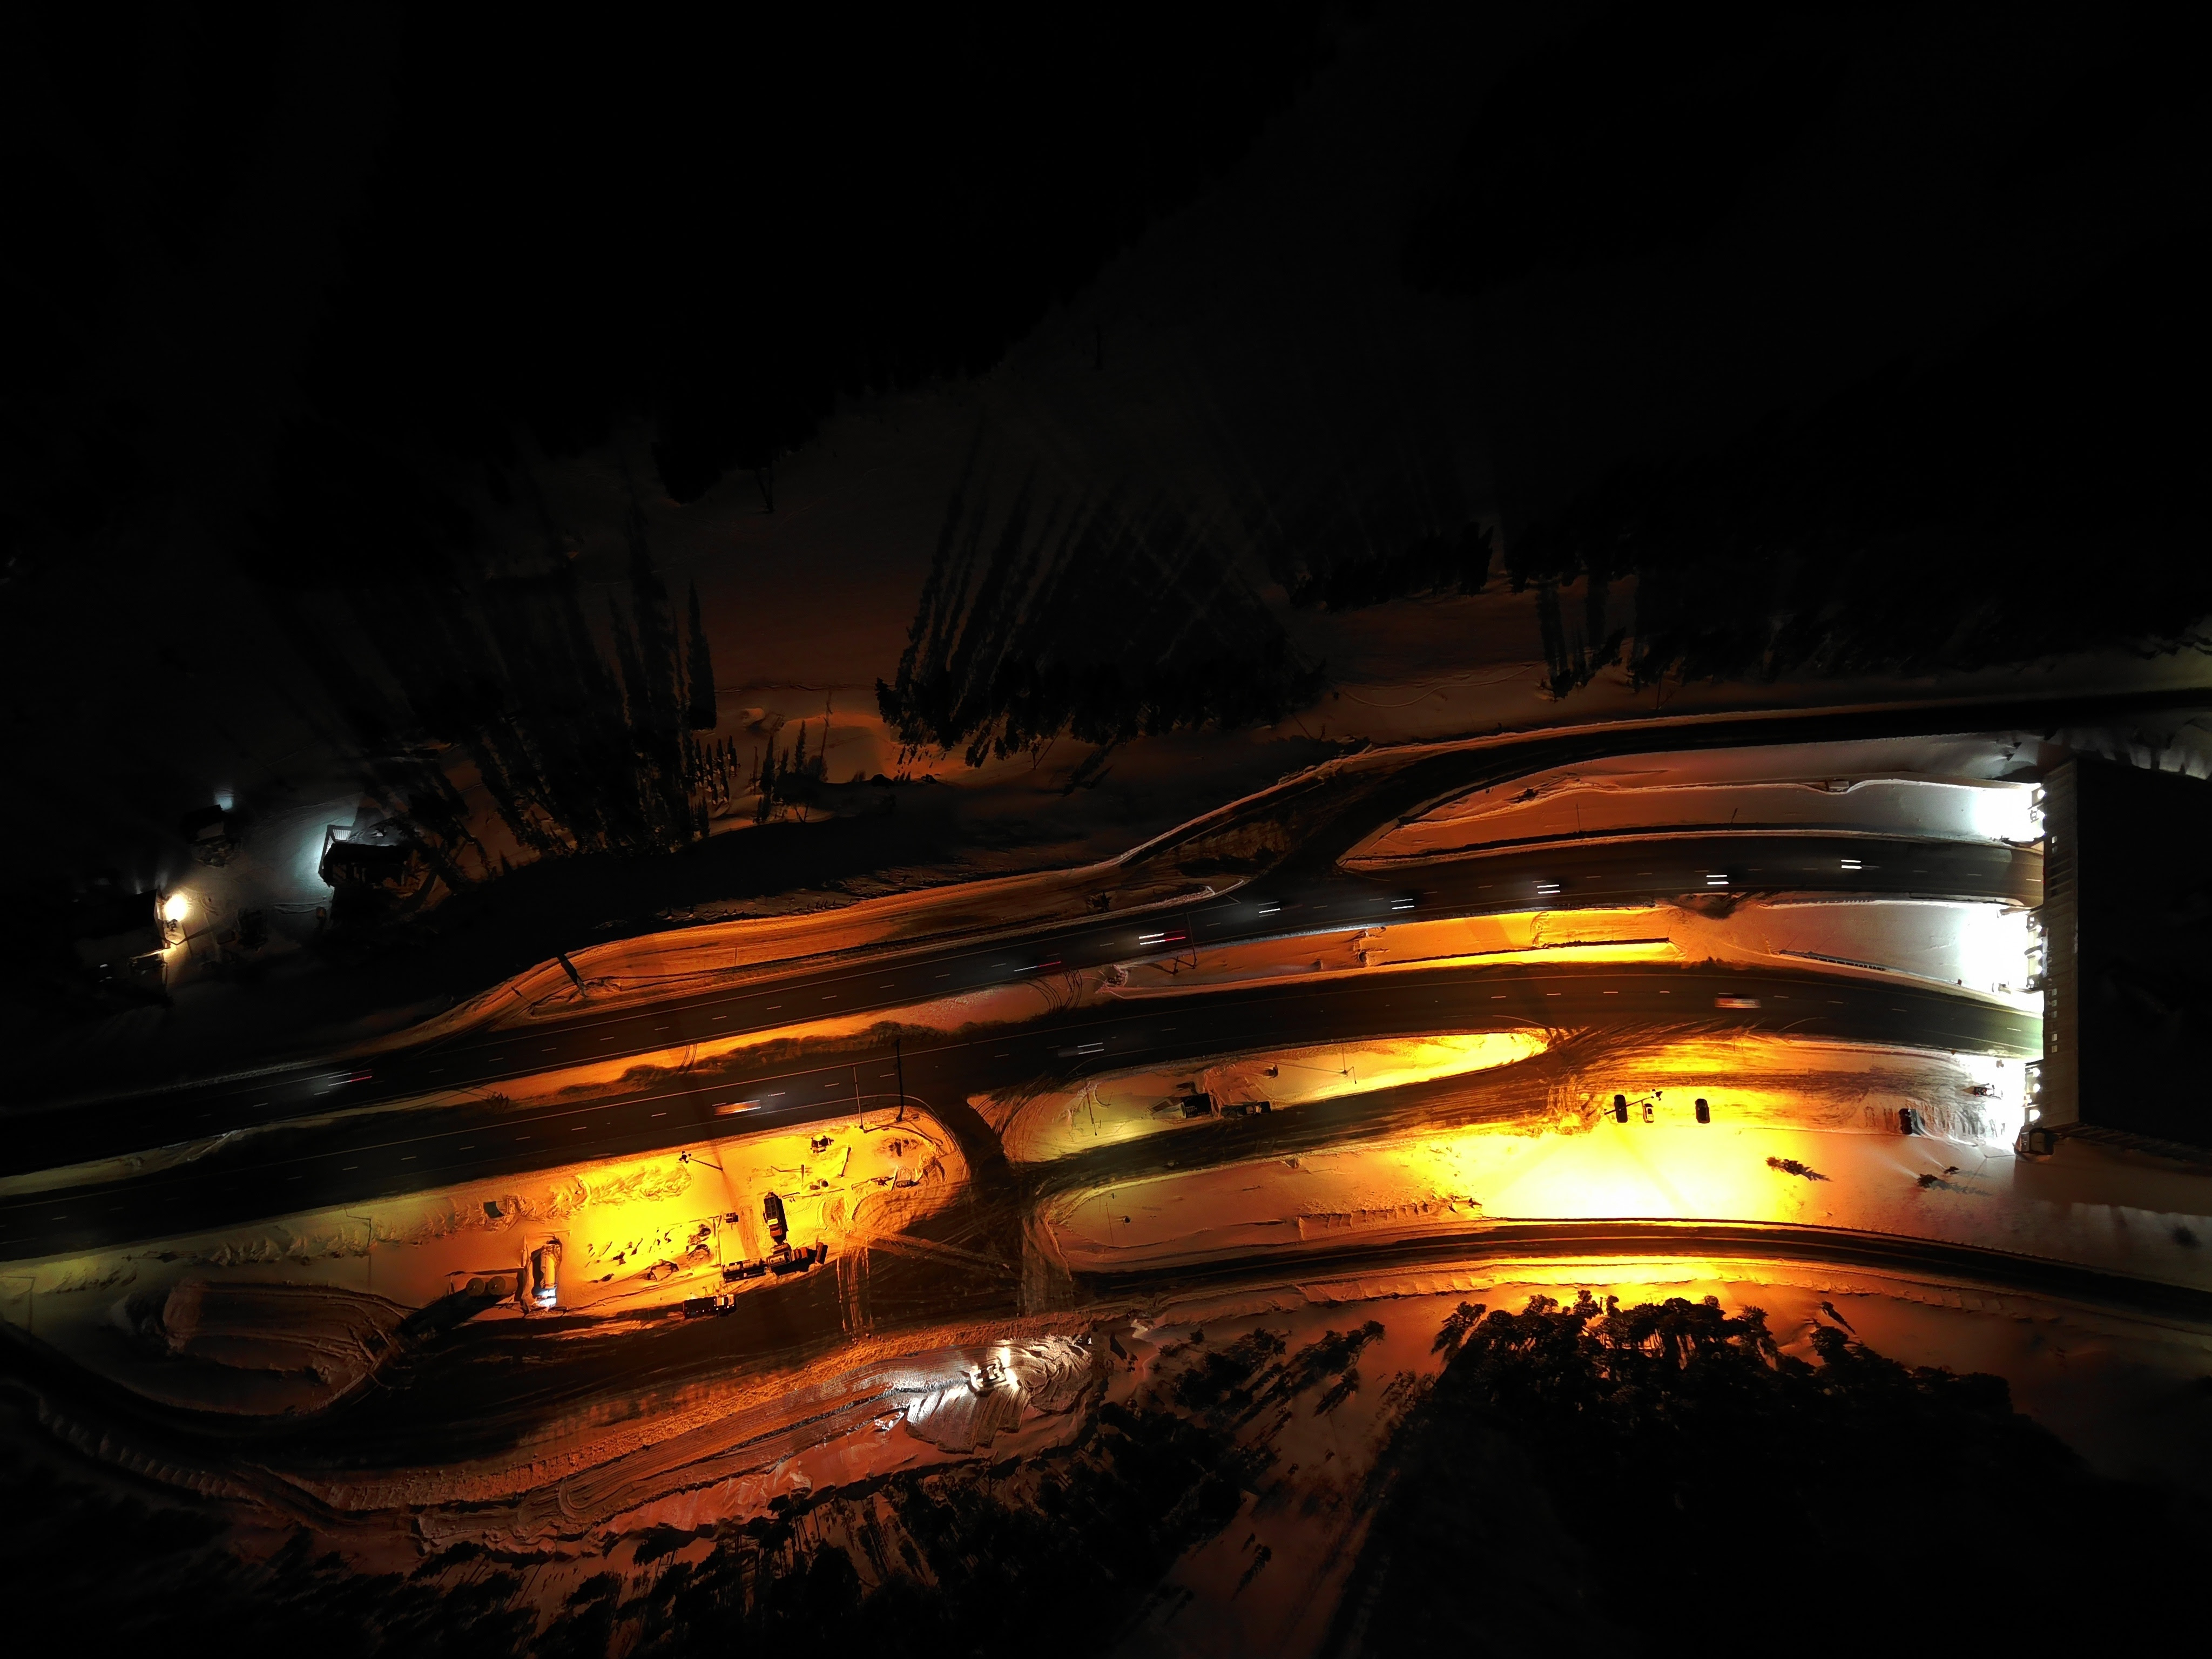 Eisenhower-Johnson Memorial Tunnel aerial view at night.jpg detail image